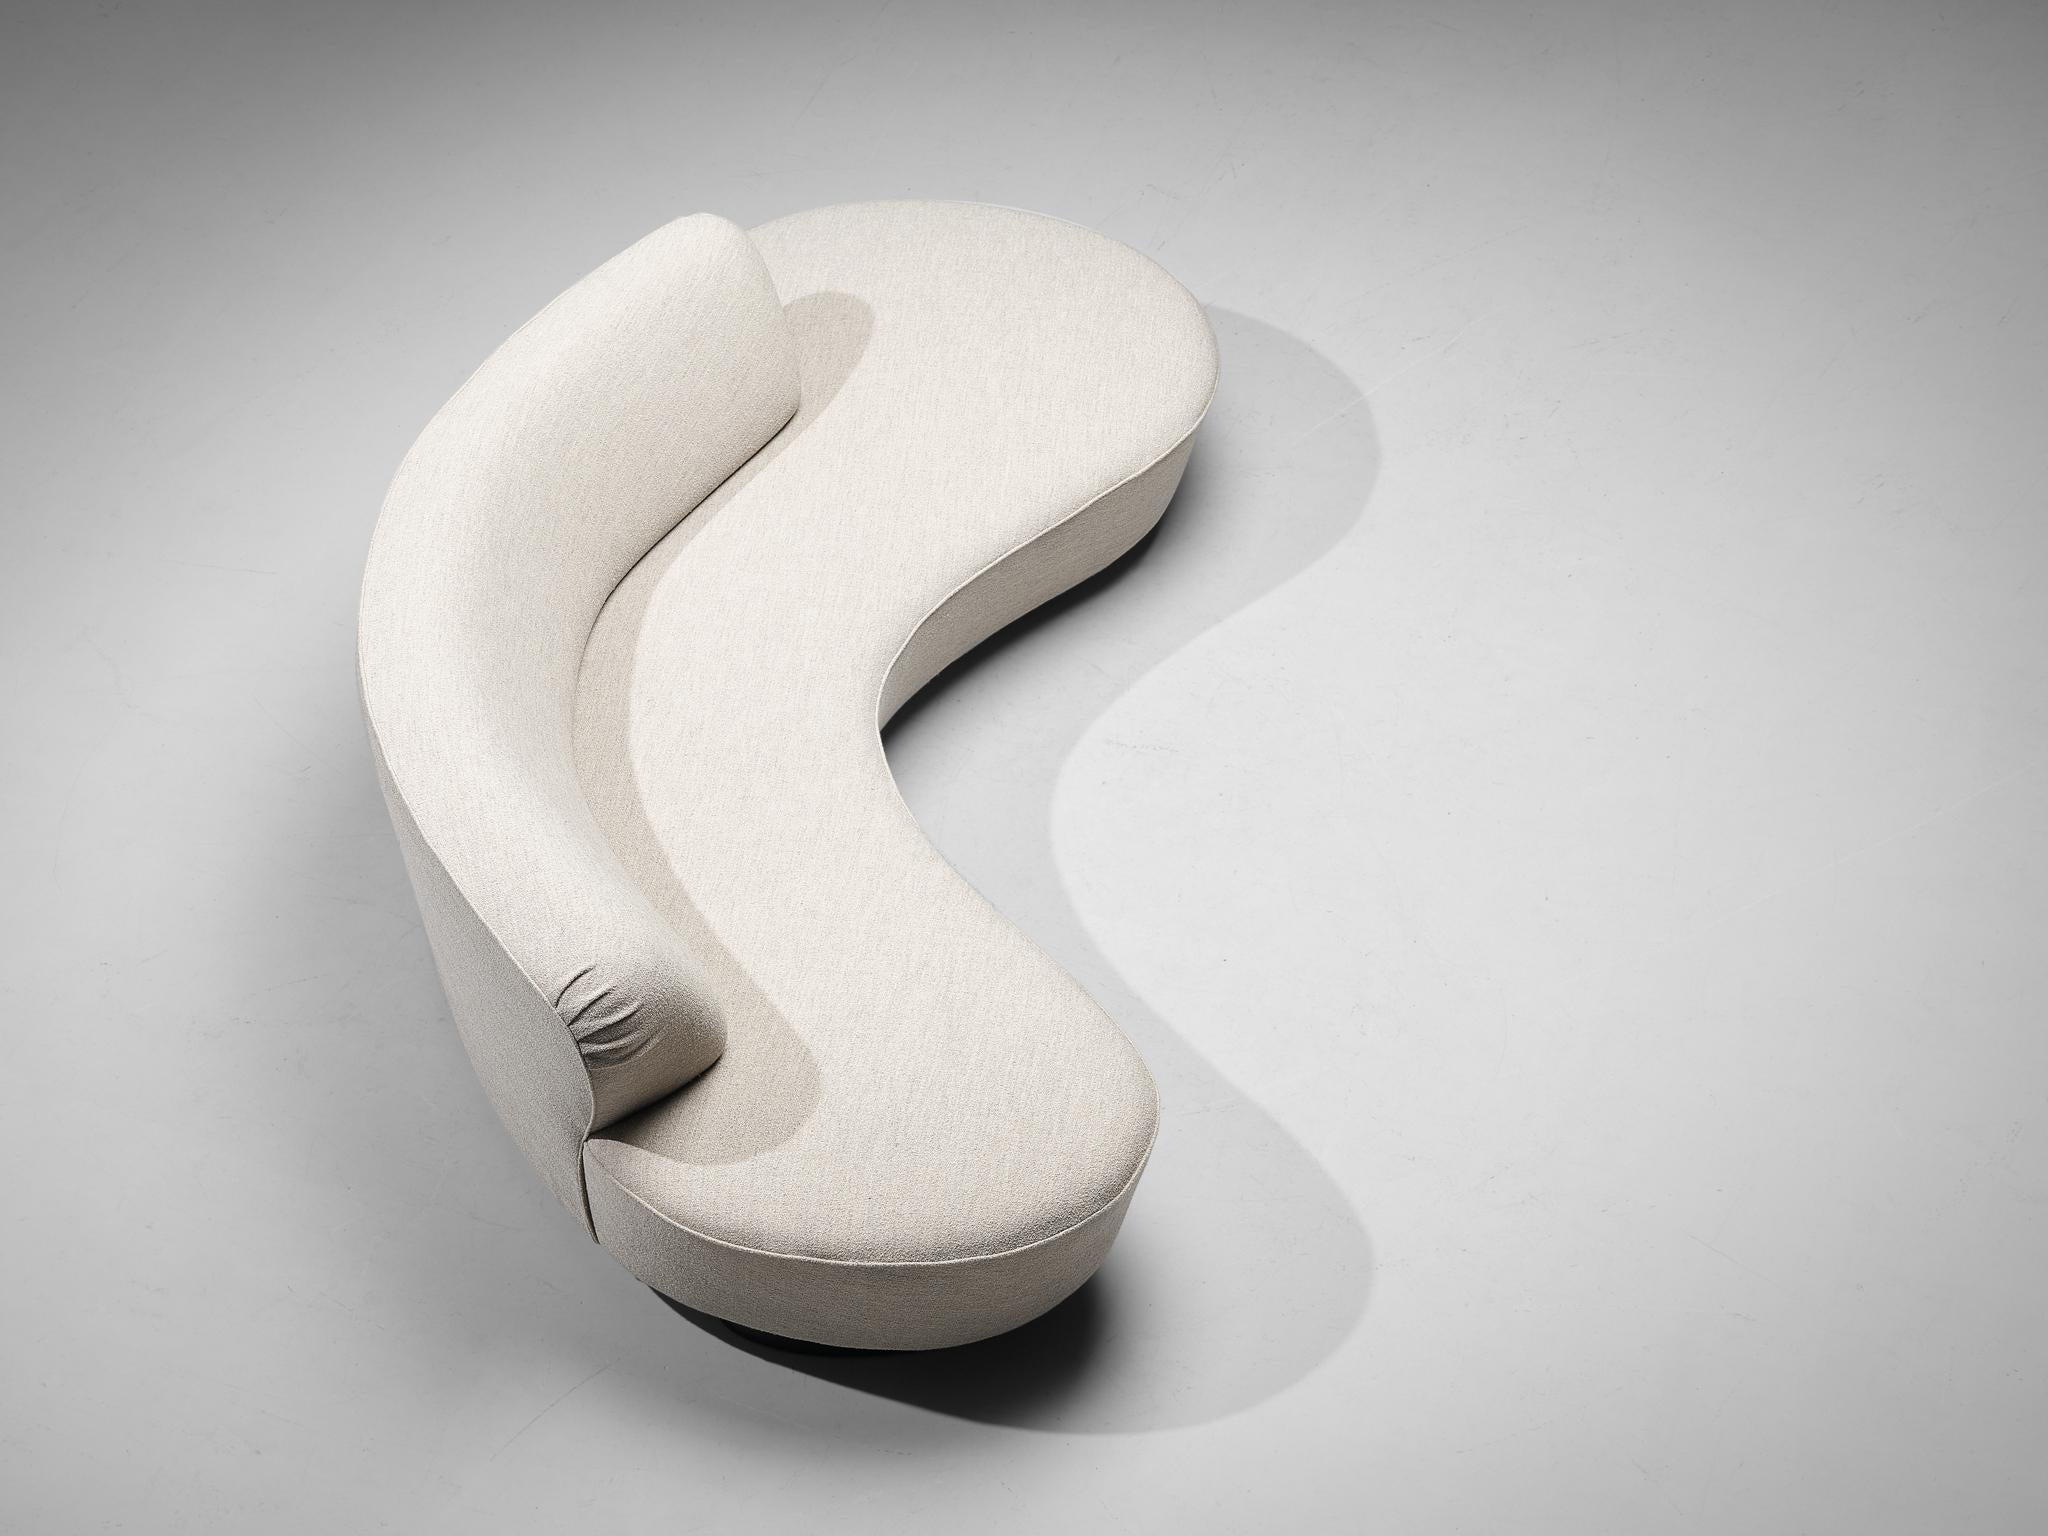 Iconic Vladimir Kagan ‘Serpentine’ Sofa in White Upholstery 1